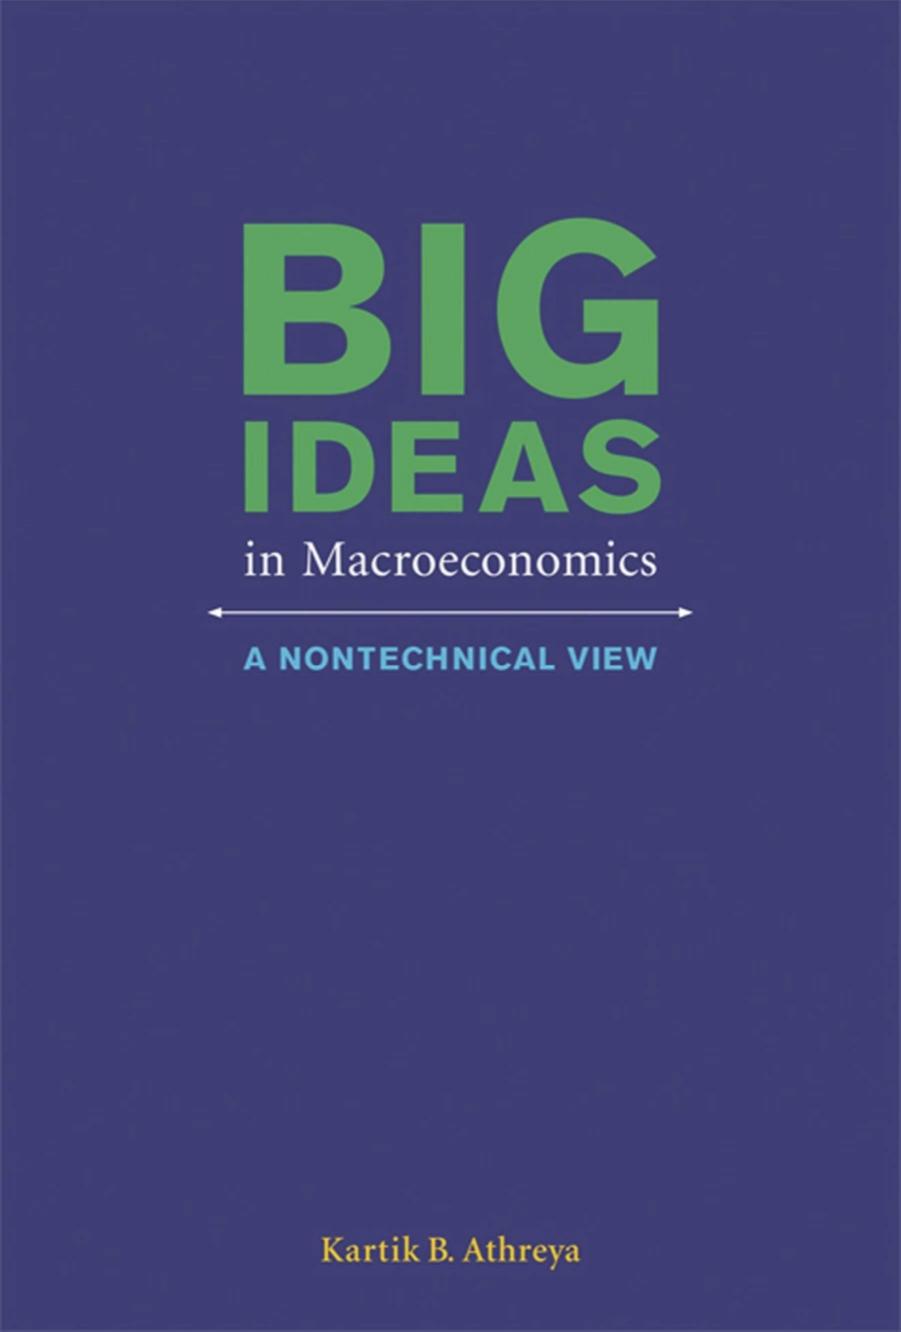 Big Ideas in Macroeconomics: A Nontechnical View by Kartik B. Athreya